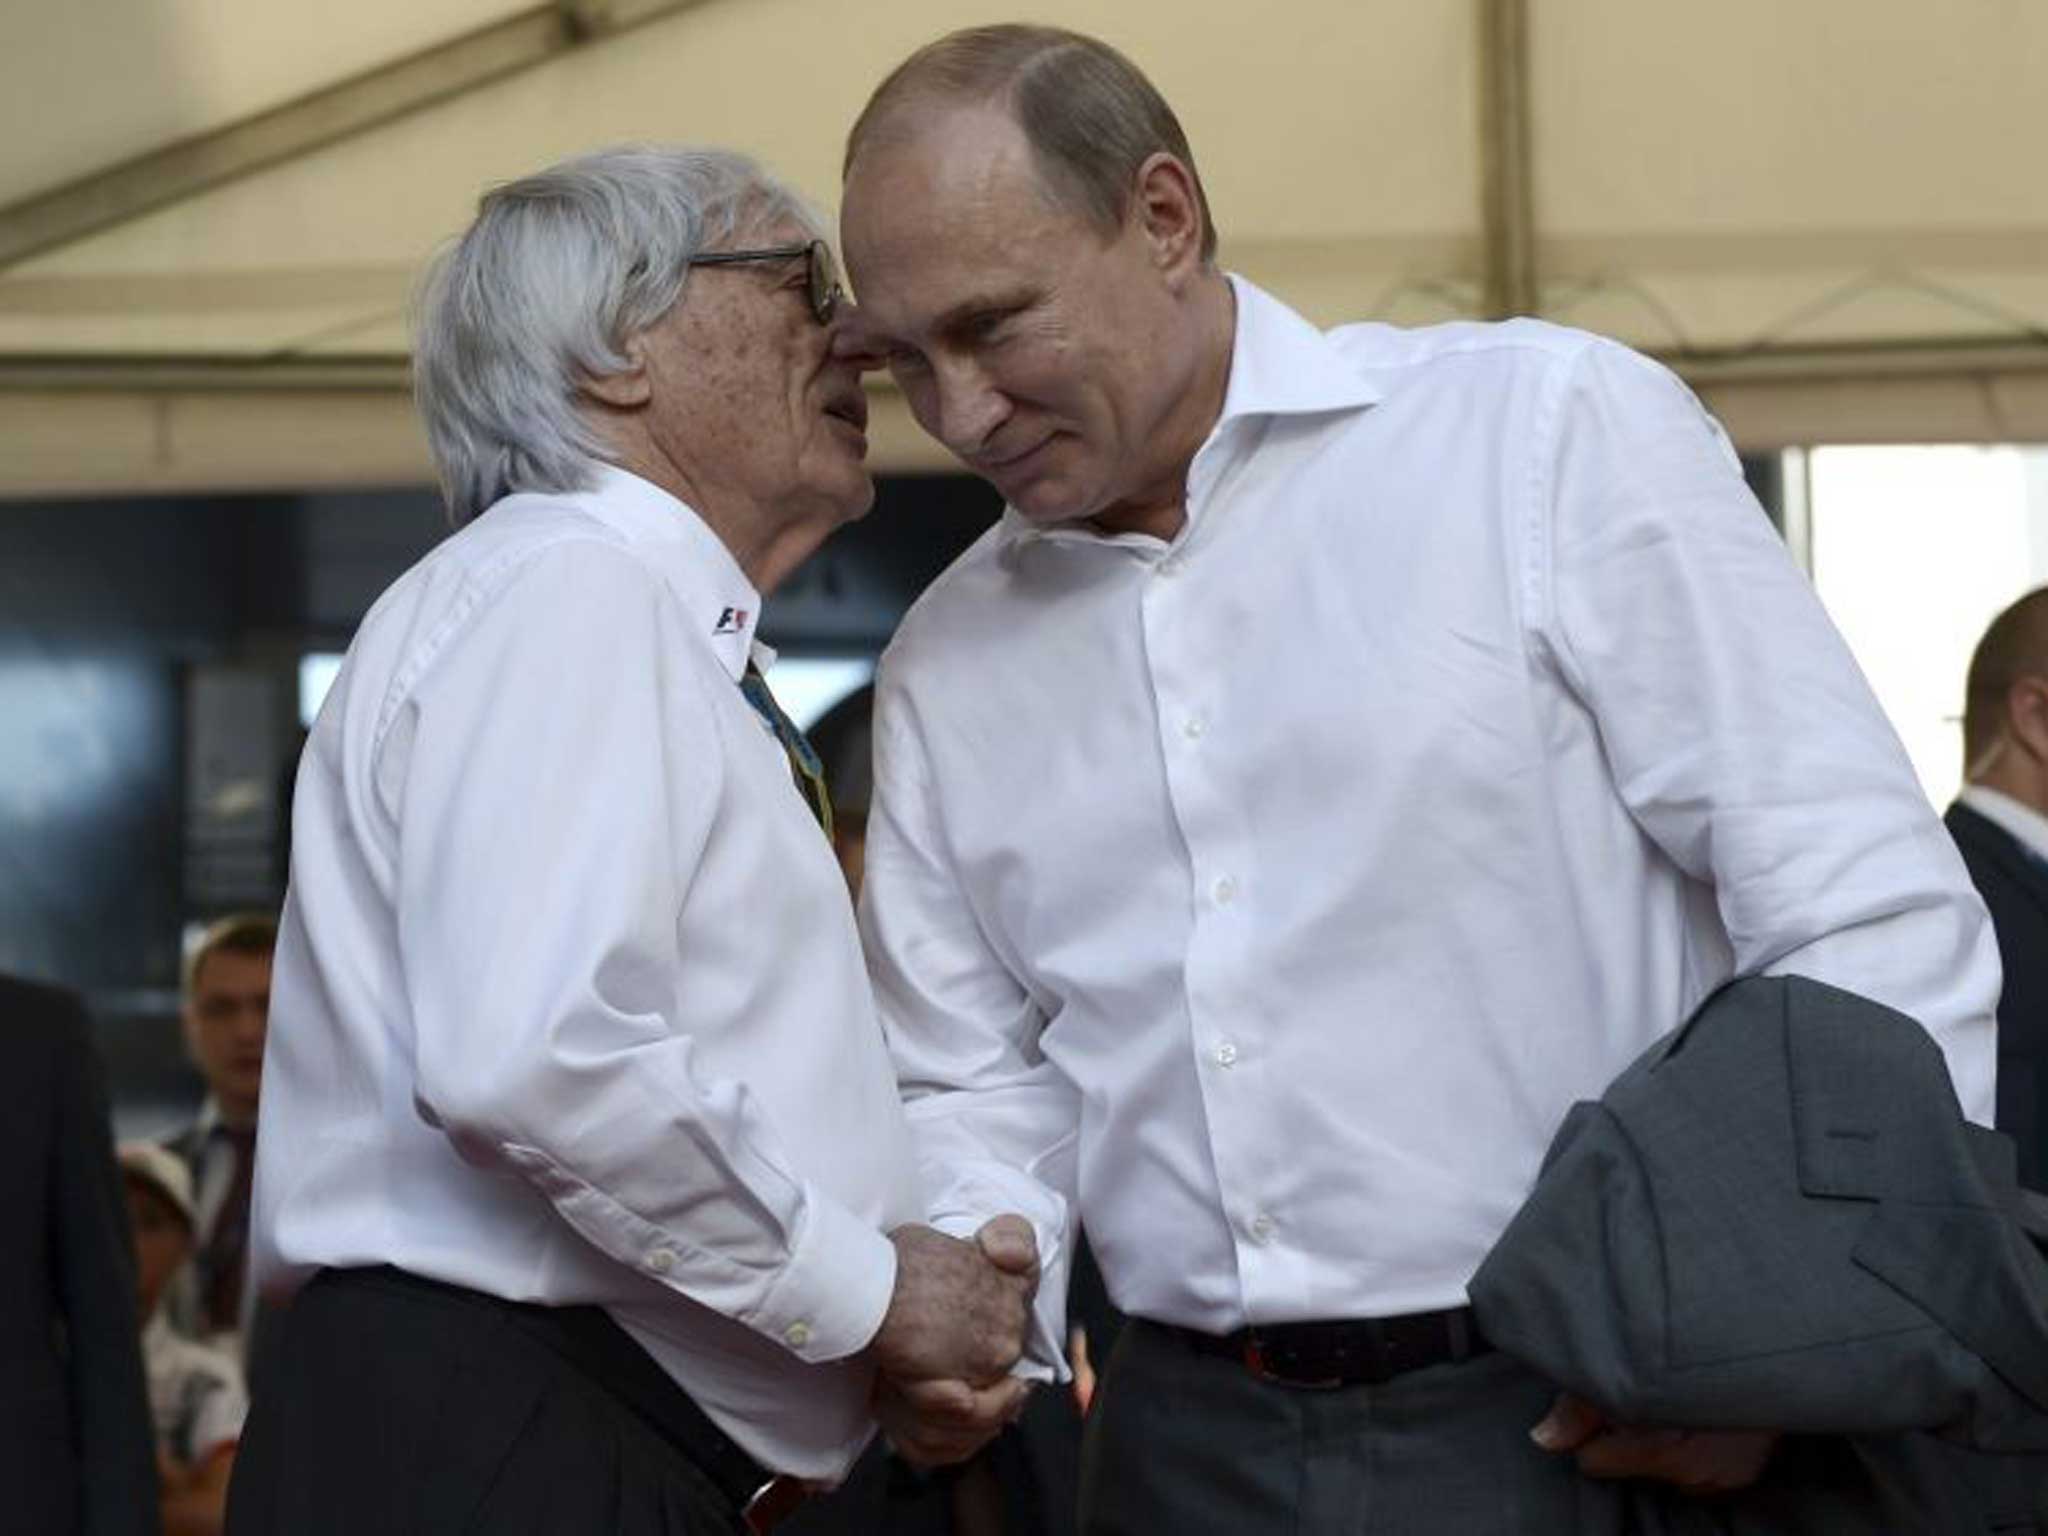 Bernie Ecclestone and Vladimir Putin greet at the Grand Prix